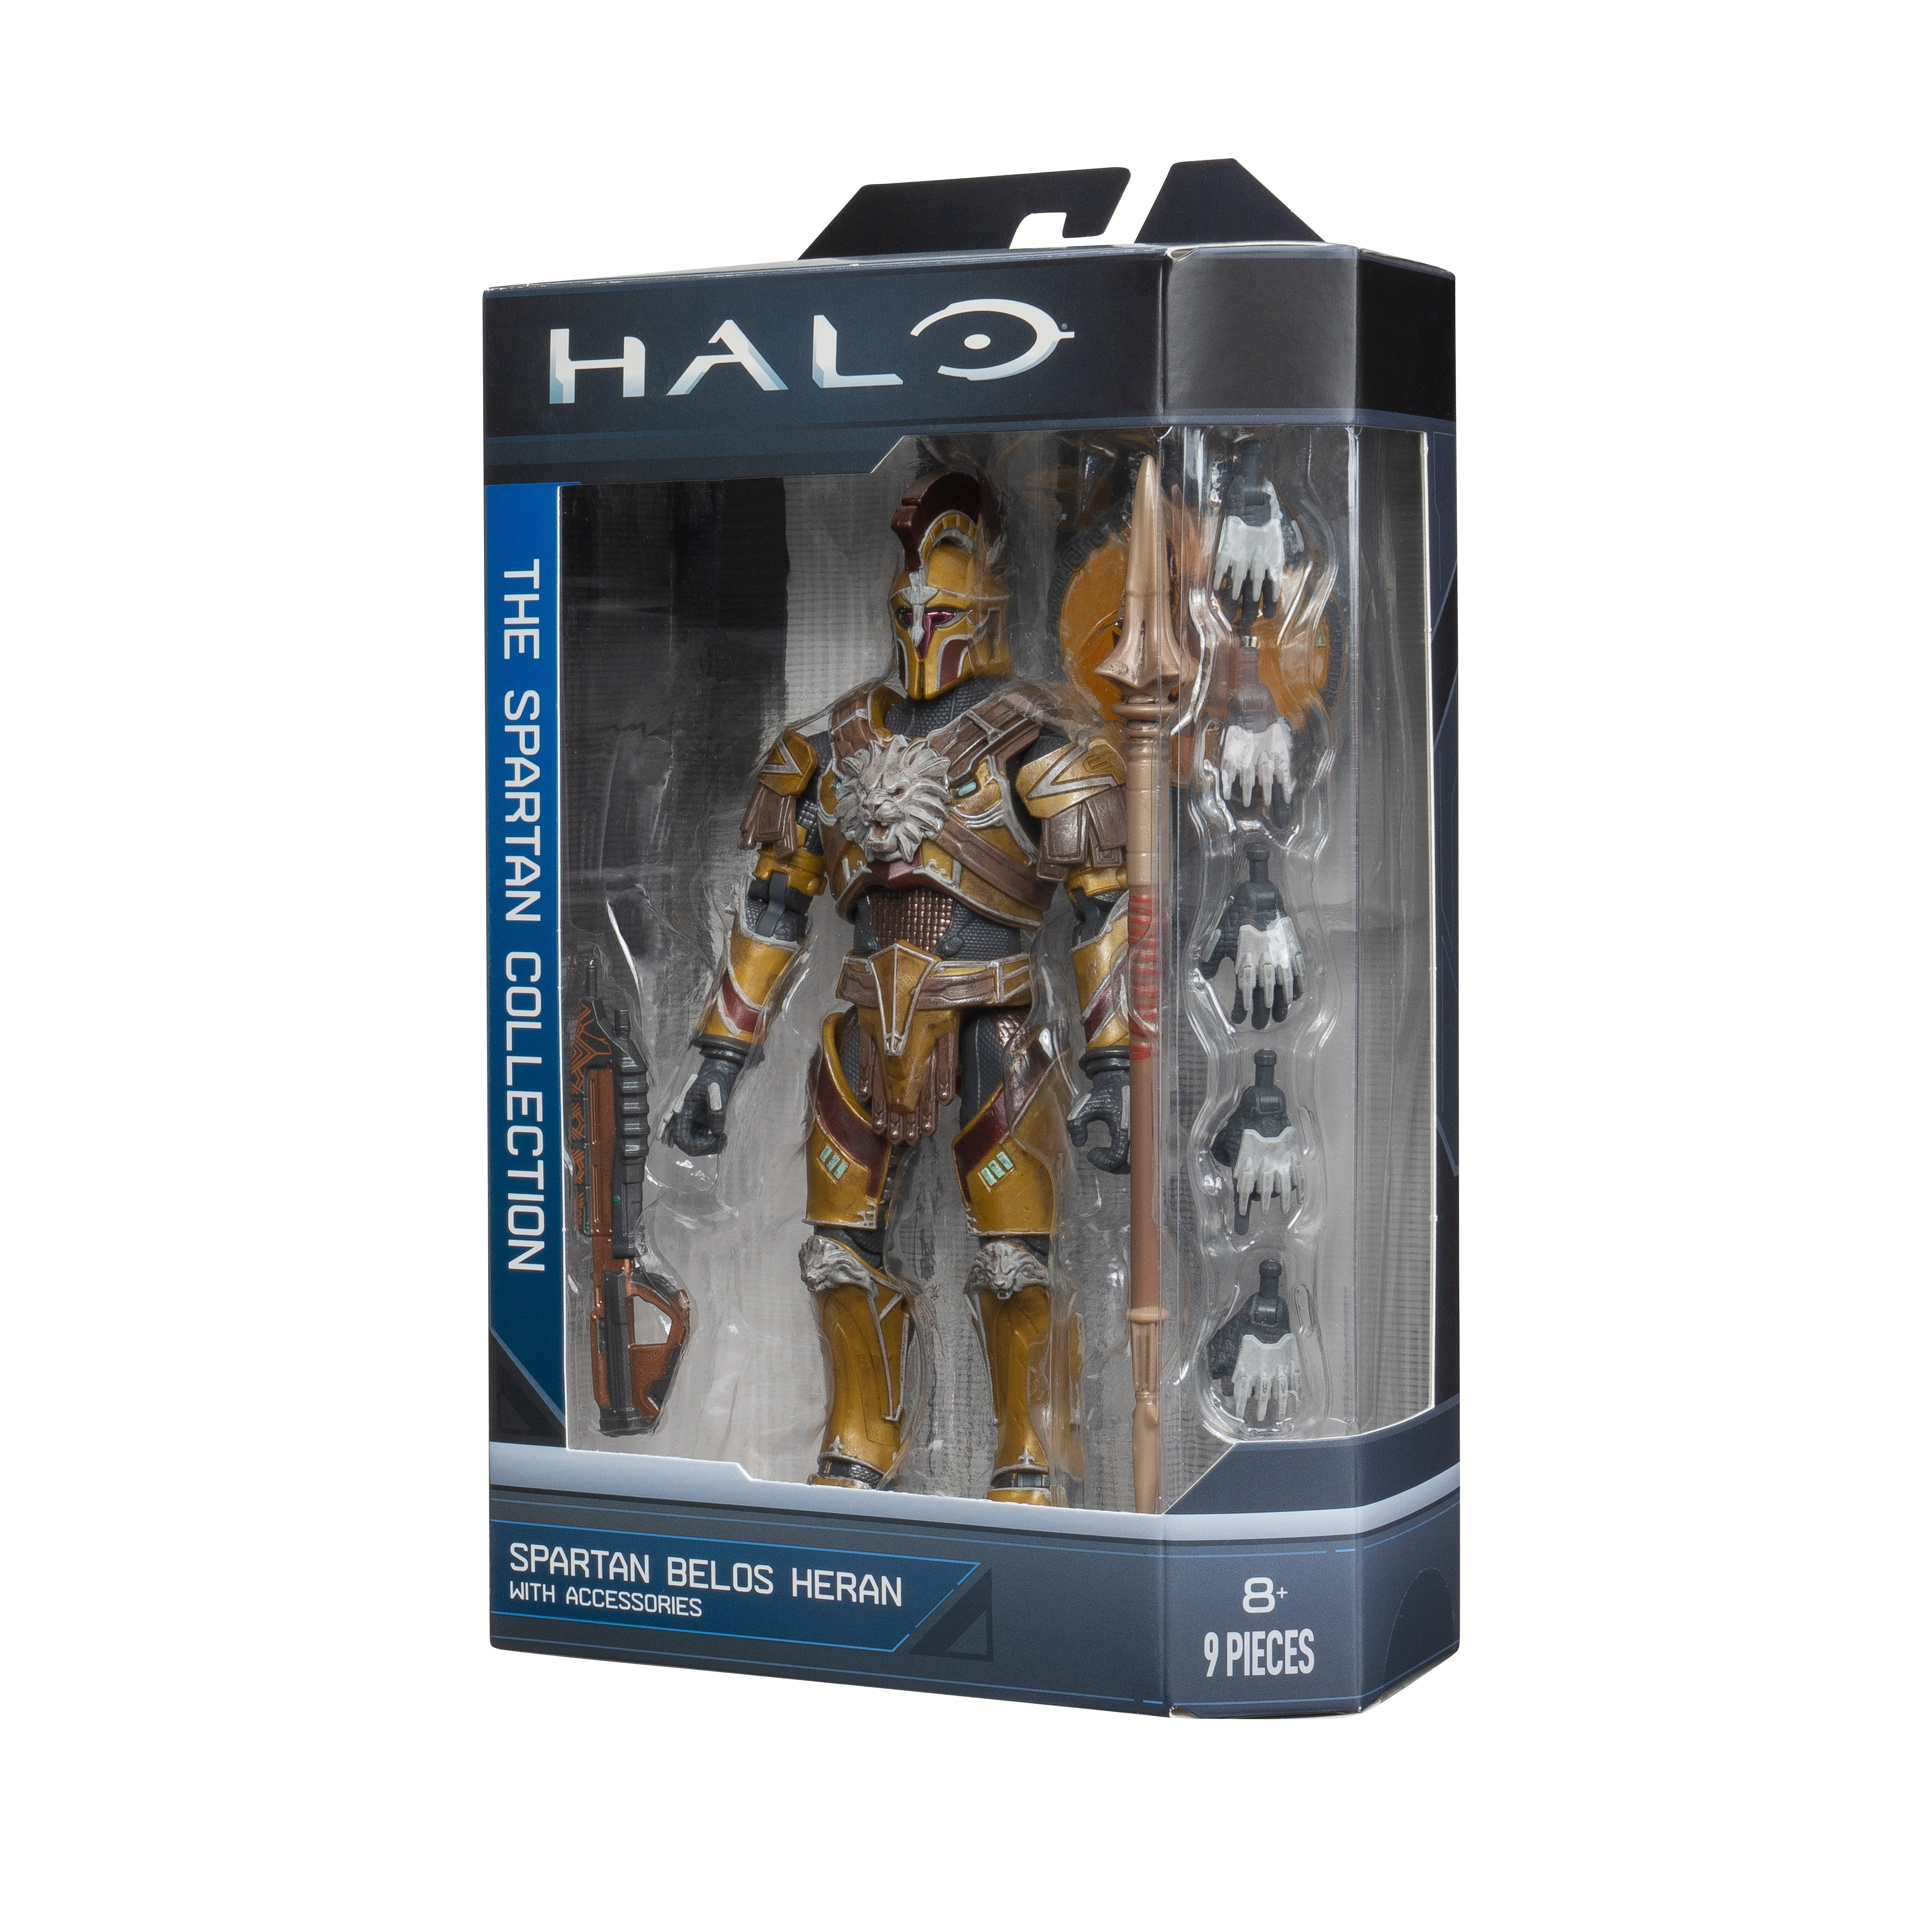 https://media.gamestop.com/i/gamestop/20009580/Jazwares-Halo-Spartan-Collection-Spartan-Belos-Heron-6-in-Action-Figure?$pdp$